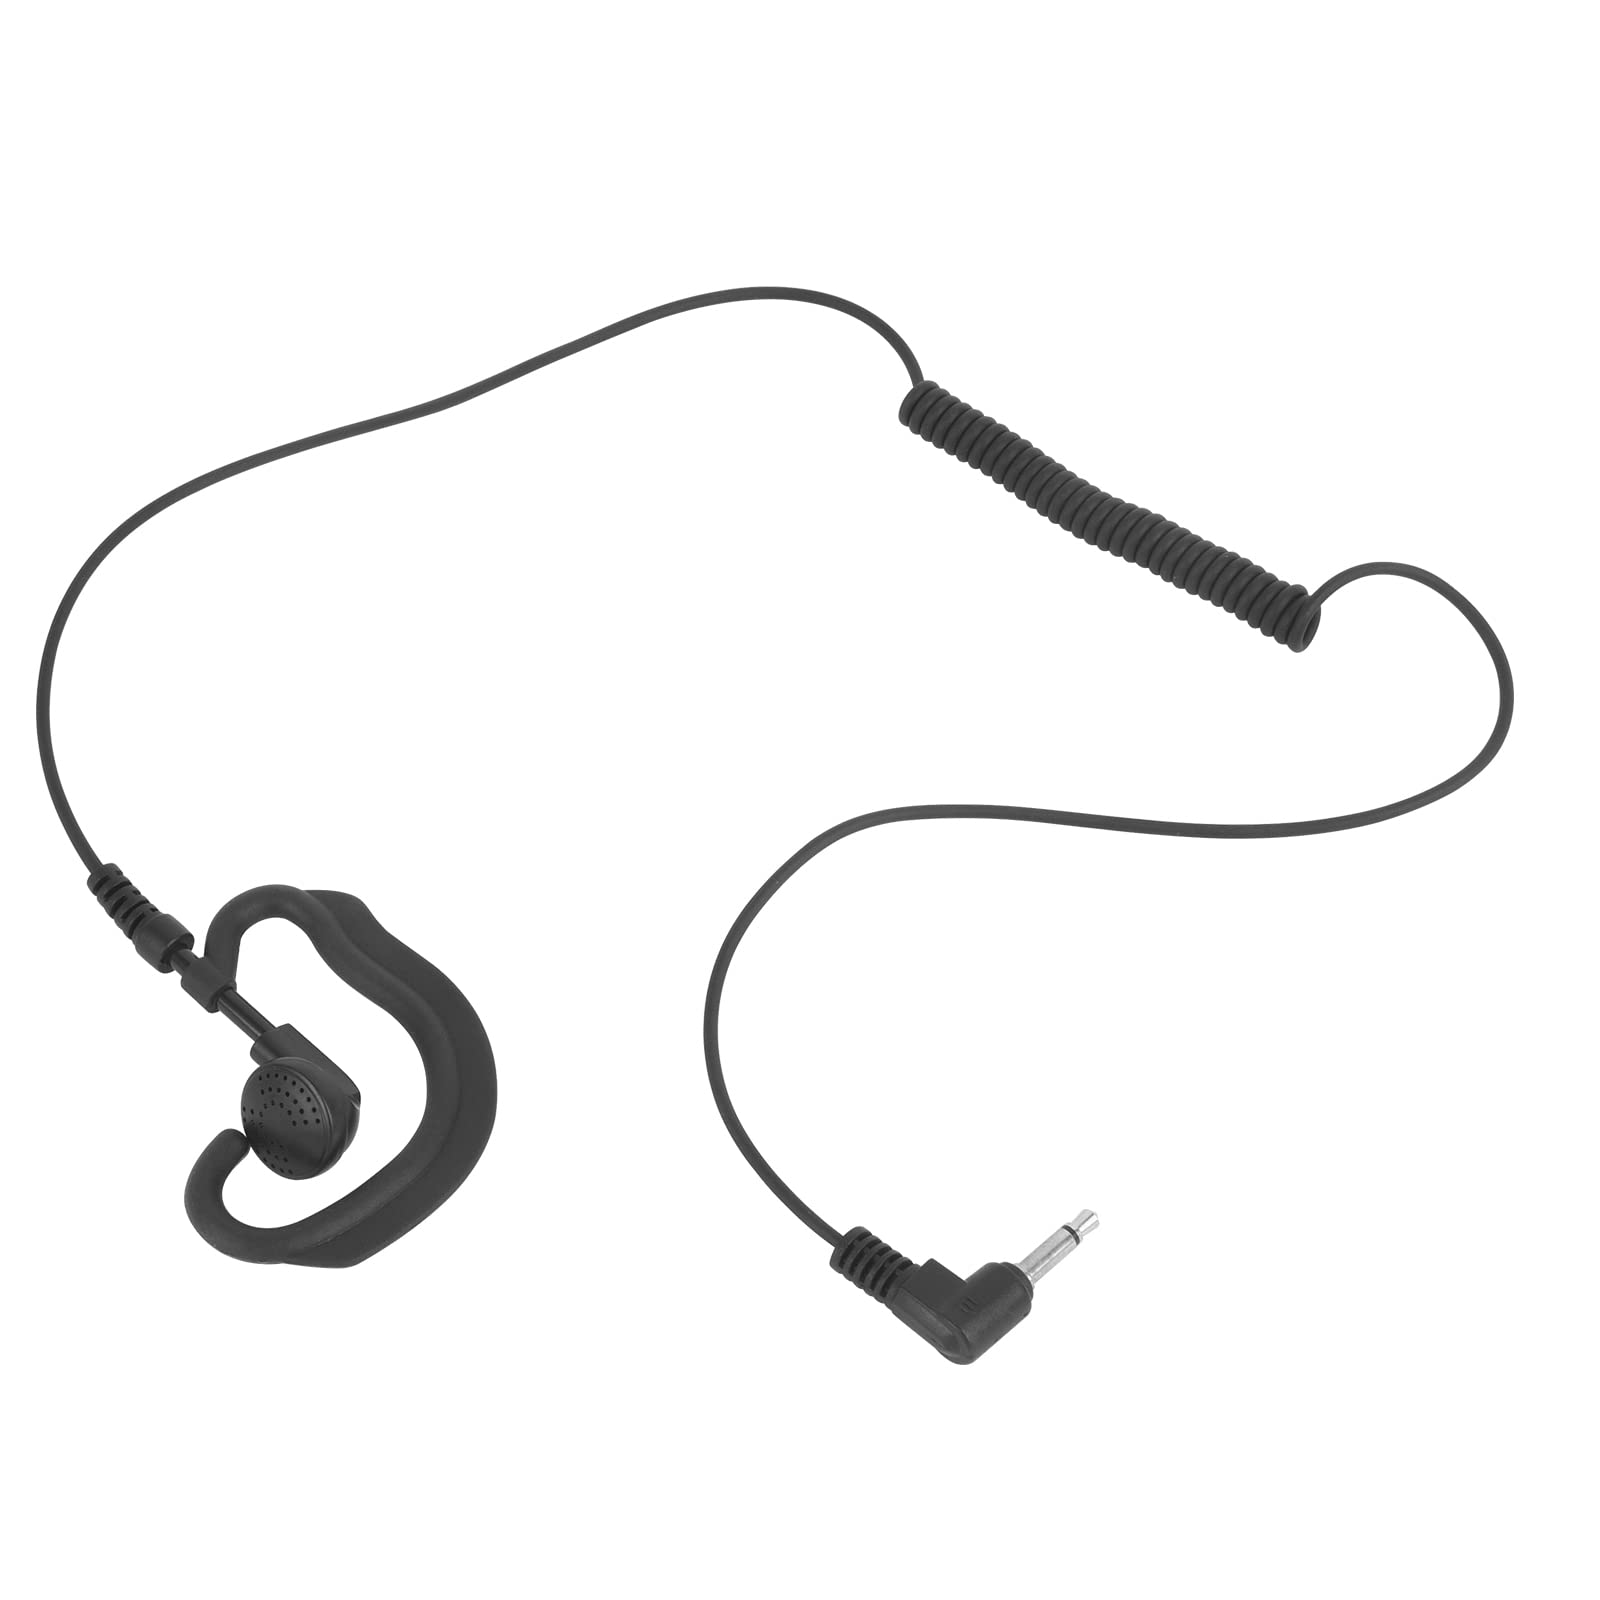 Pdflie listen only earpiece g shape soft ear hook headset mm plug right left side police radio surveillance receiver for baofeng motorola kenwood uv